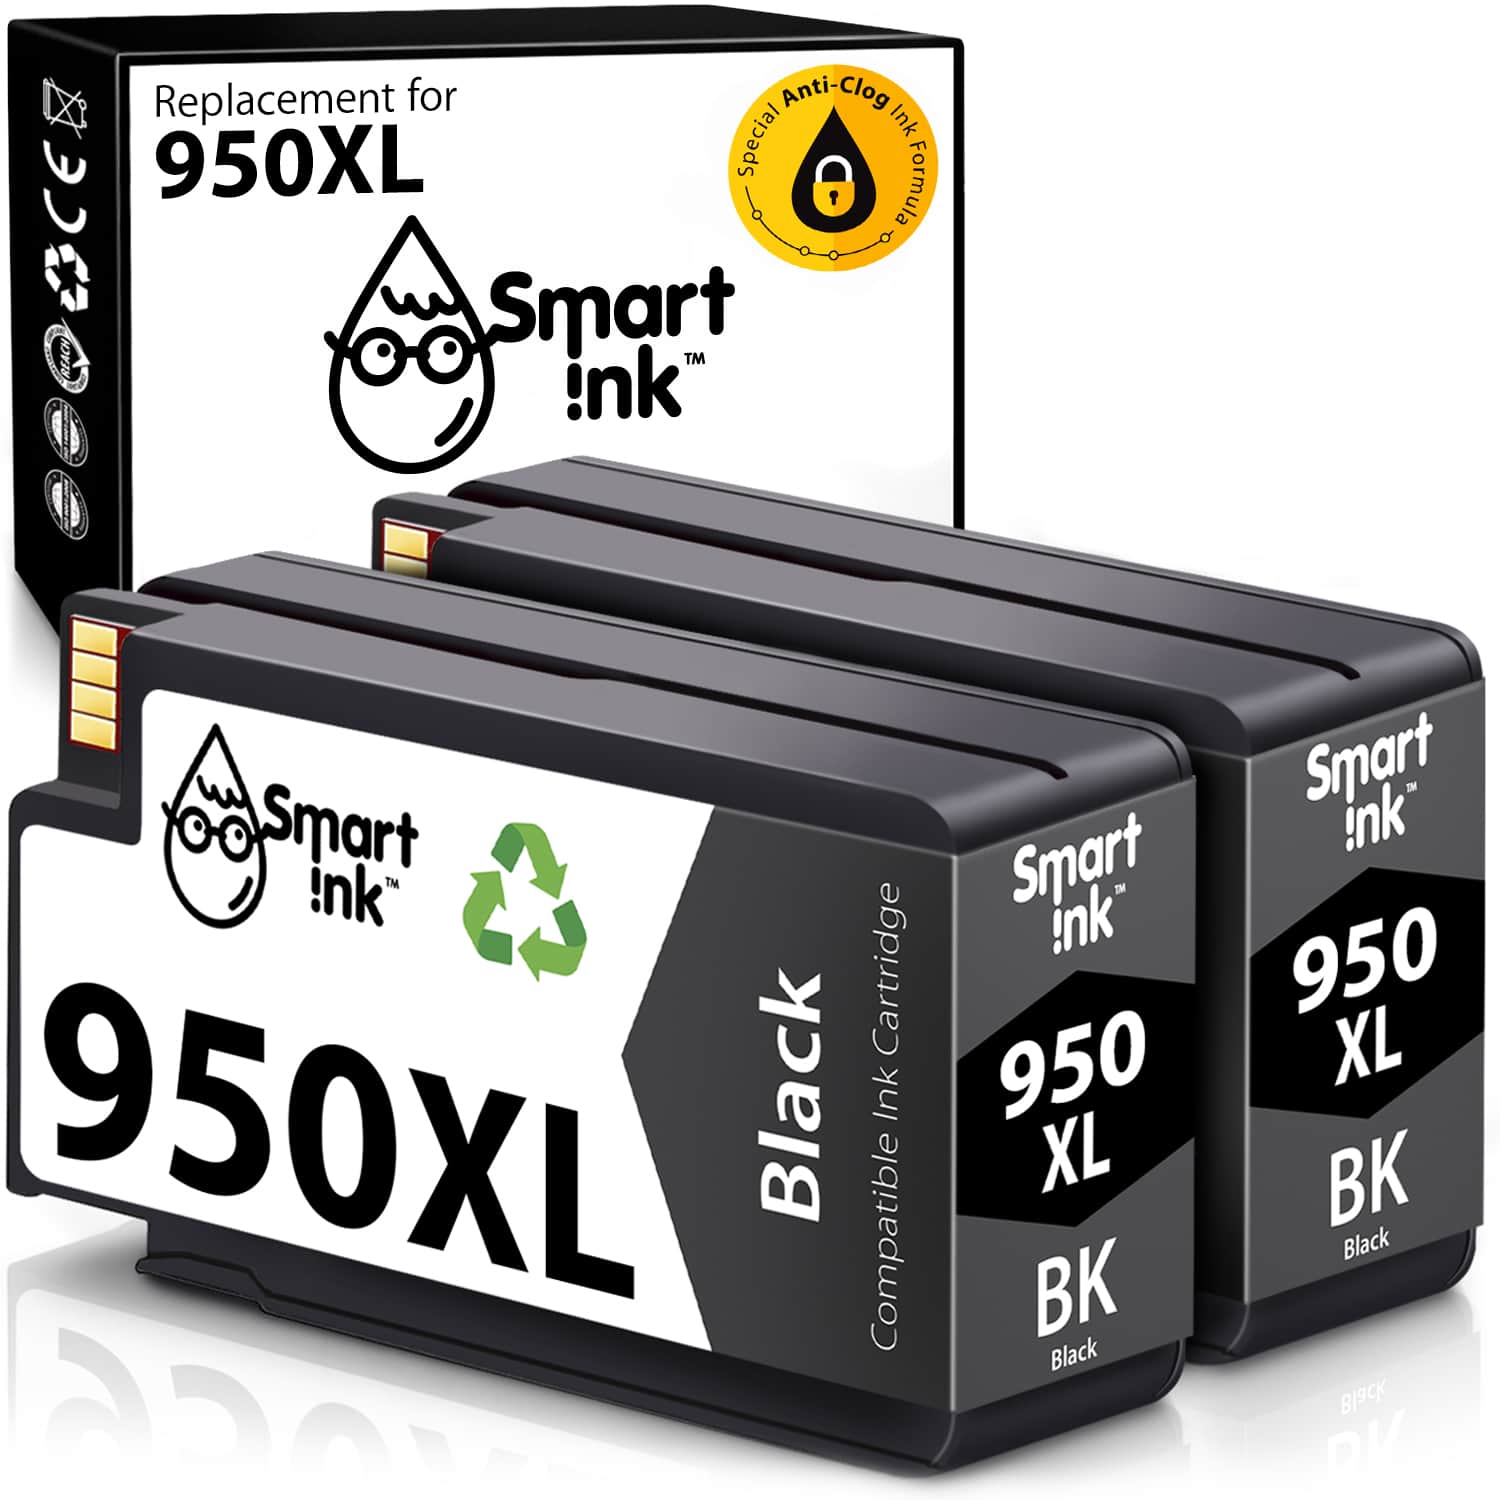 Get compatible HP 950 Black Ink Cartridges (2 pieces) | Smart Ink